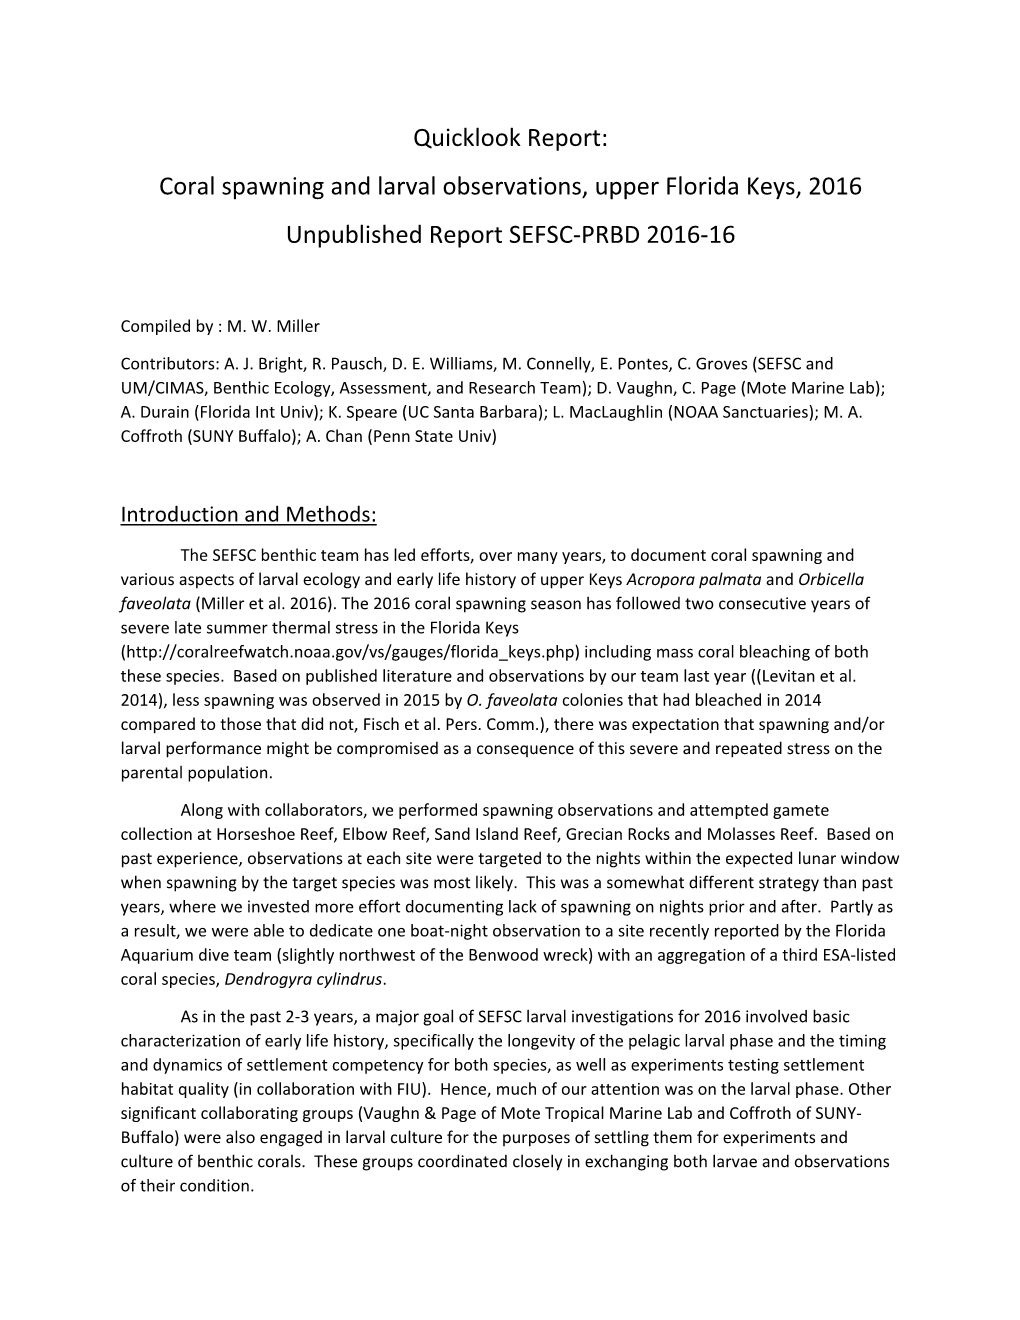 Quicklook Report: Coral Spawning and Larval Observations, Upper Florida Keys, 2016 Unpublished Report SEFSC‐PRBD 2016‐16